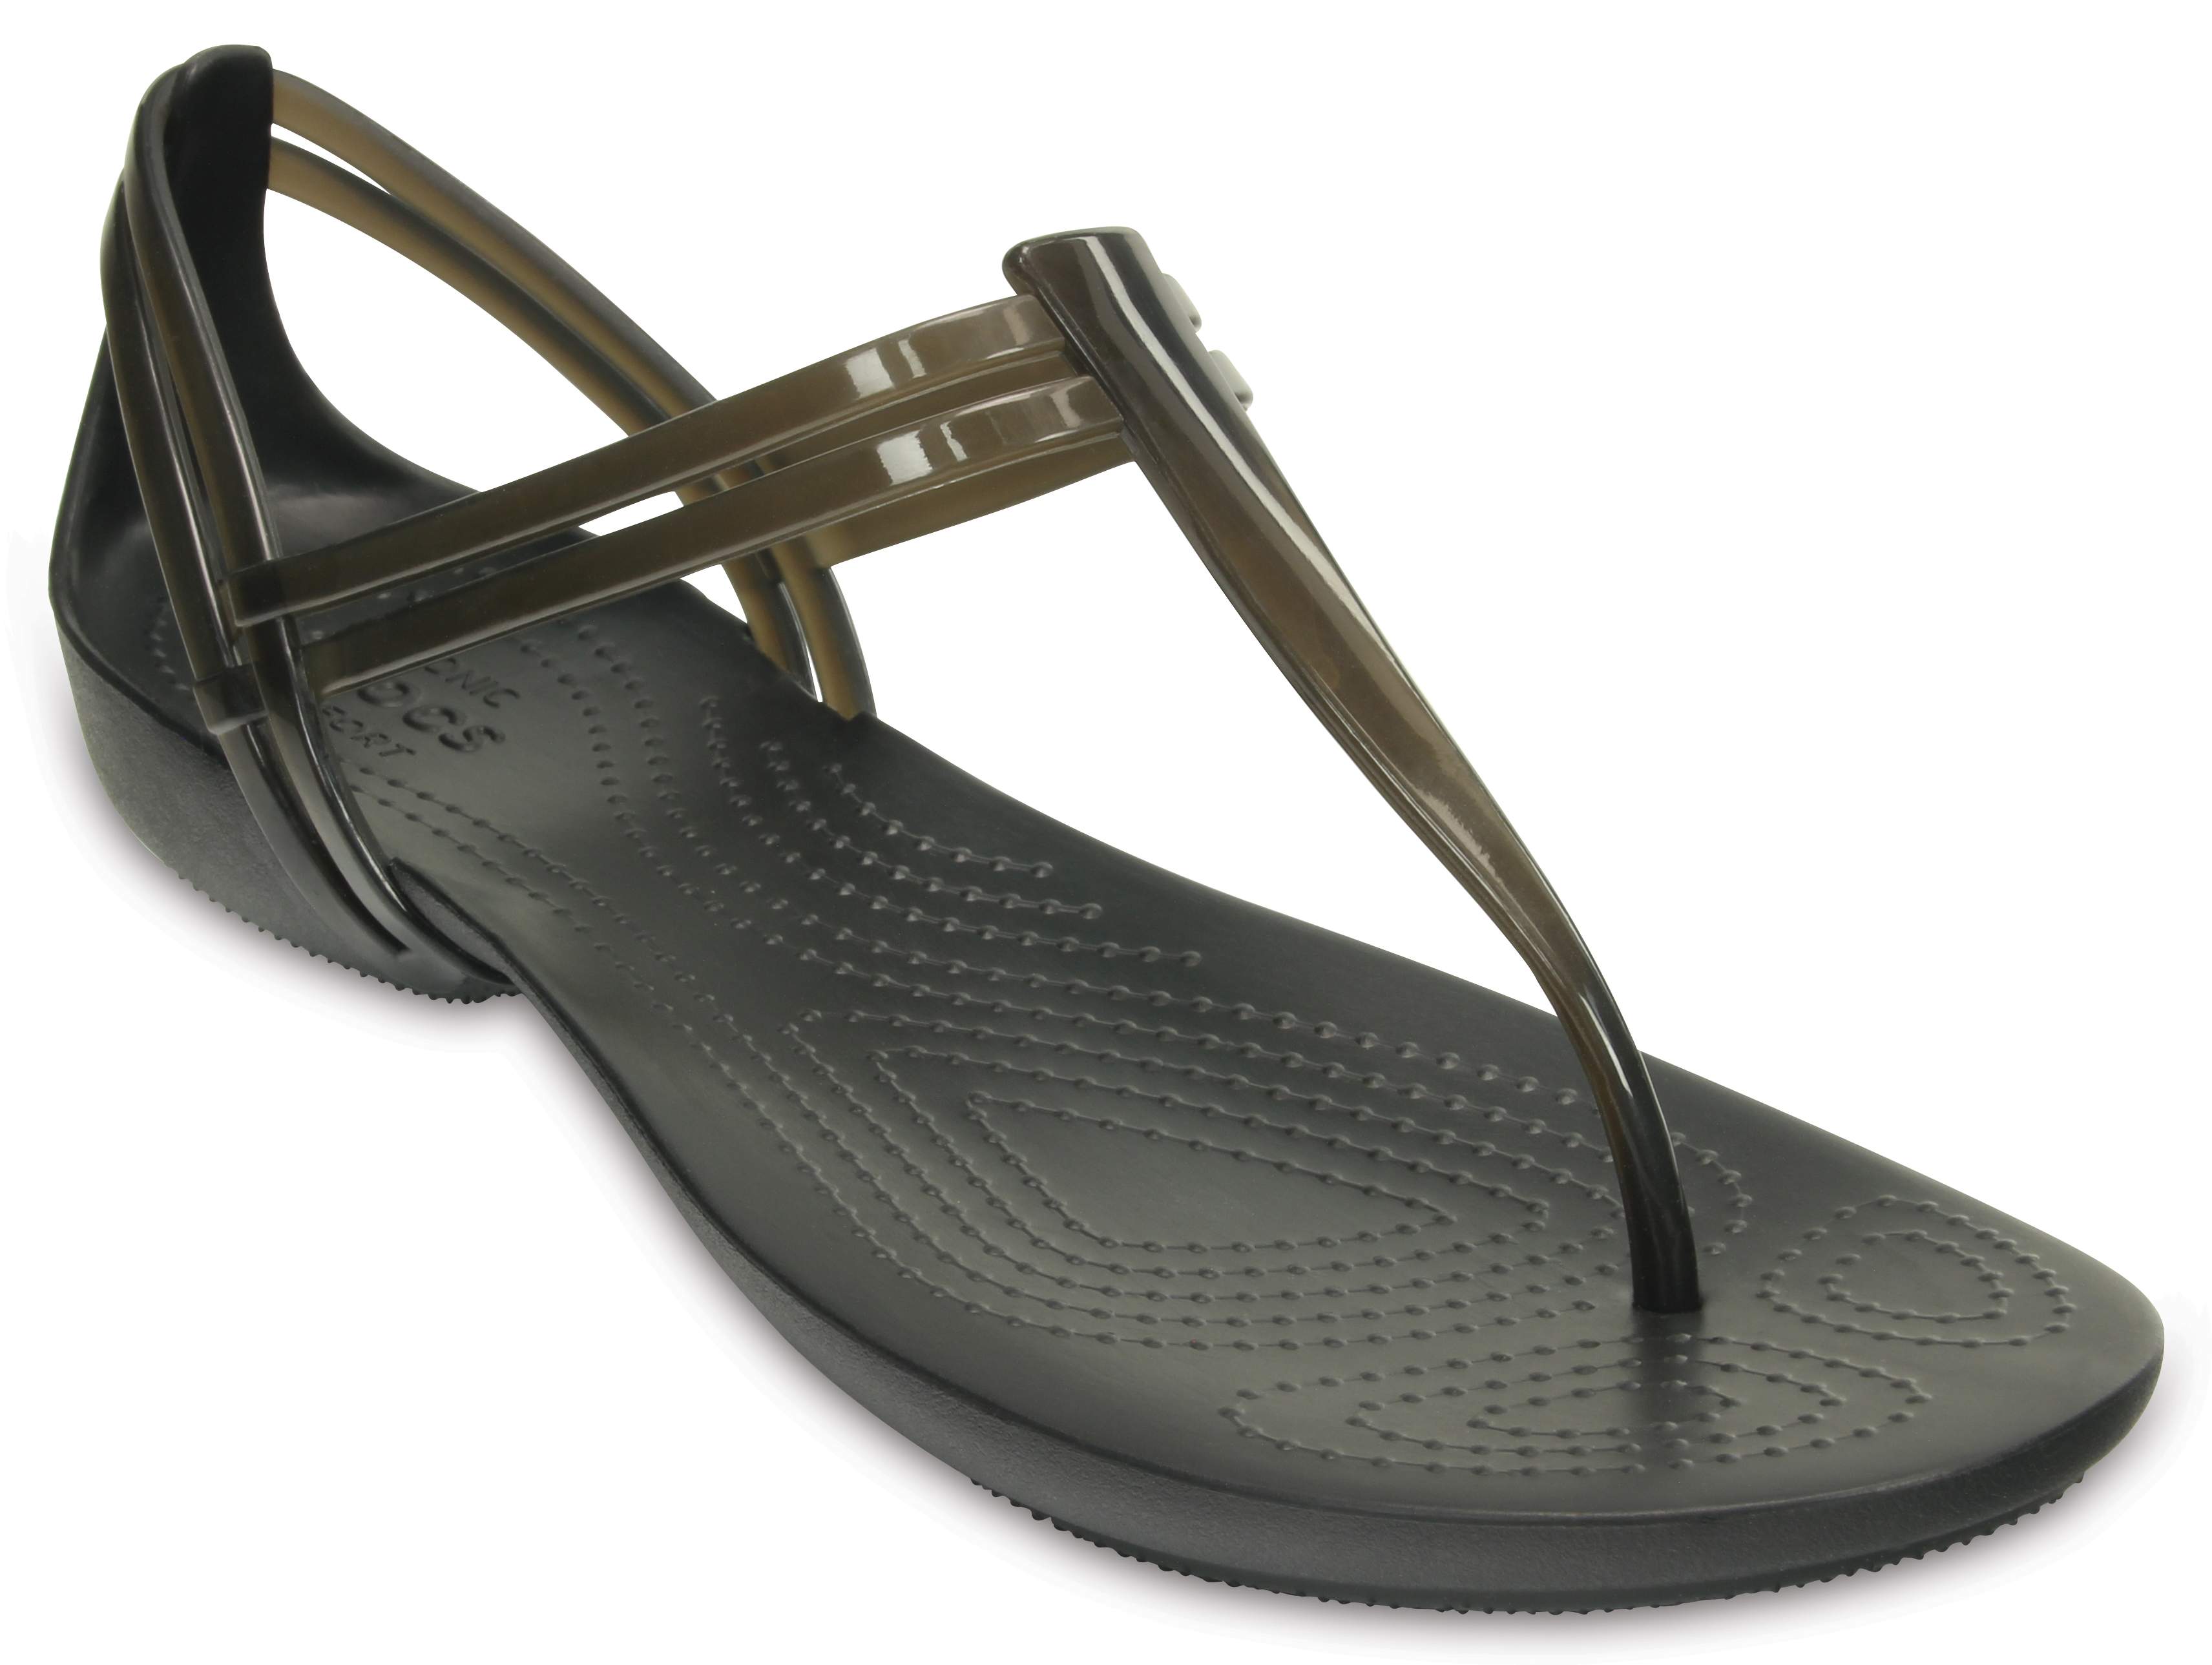 crocs sandals australia